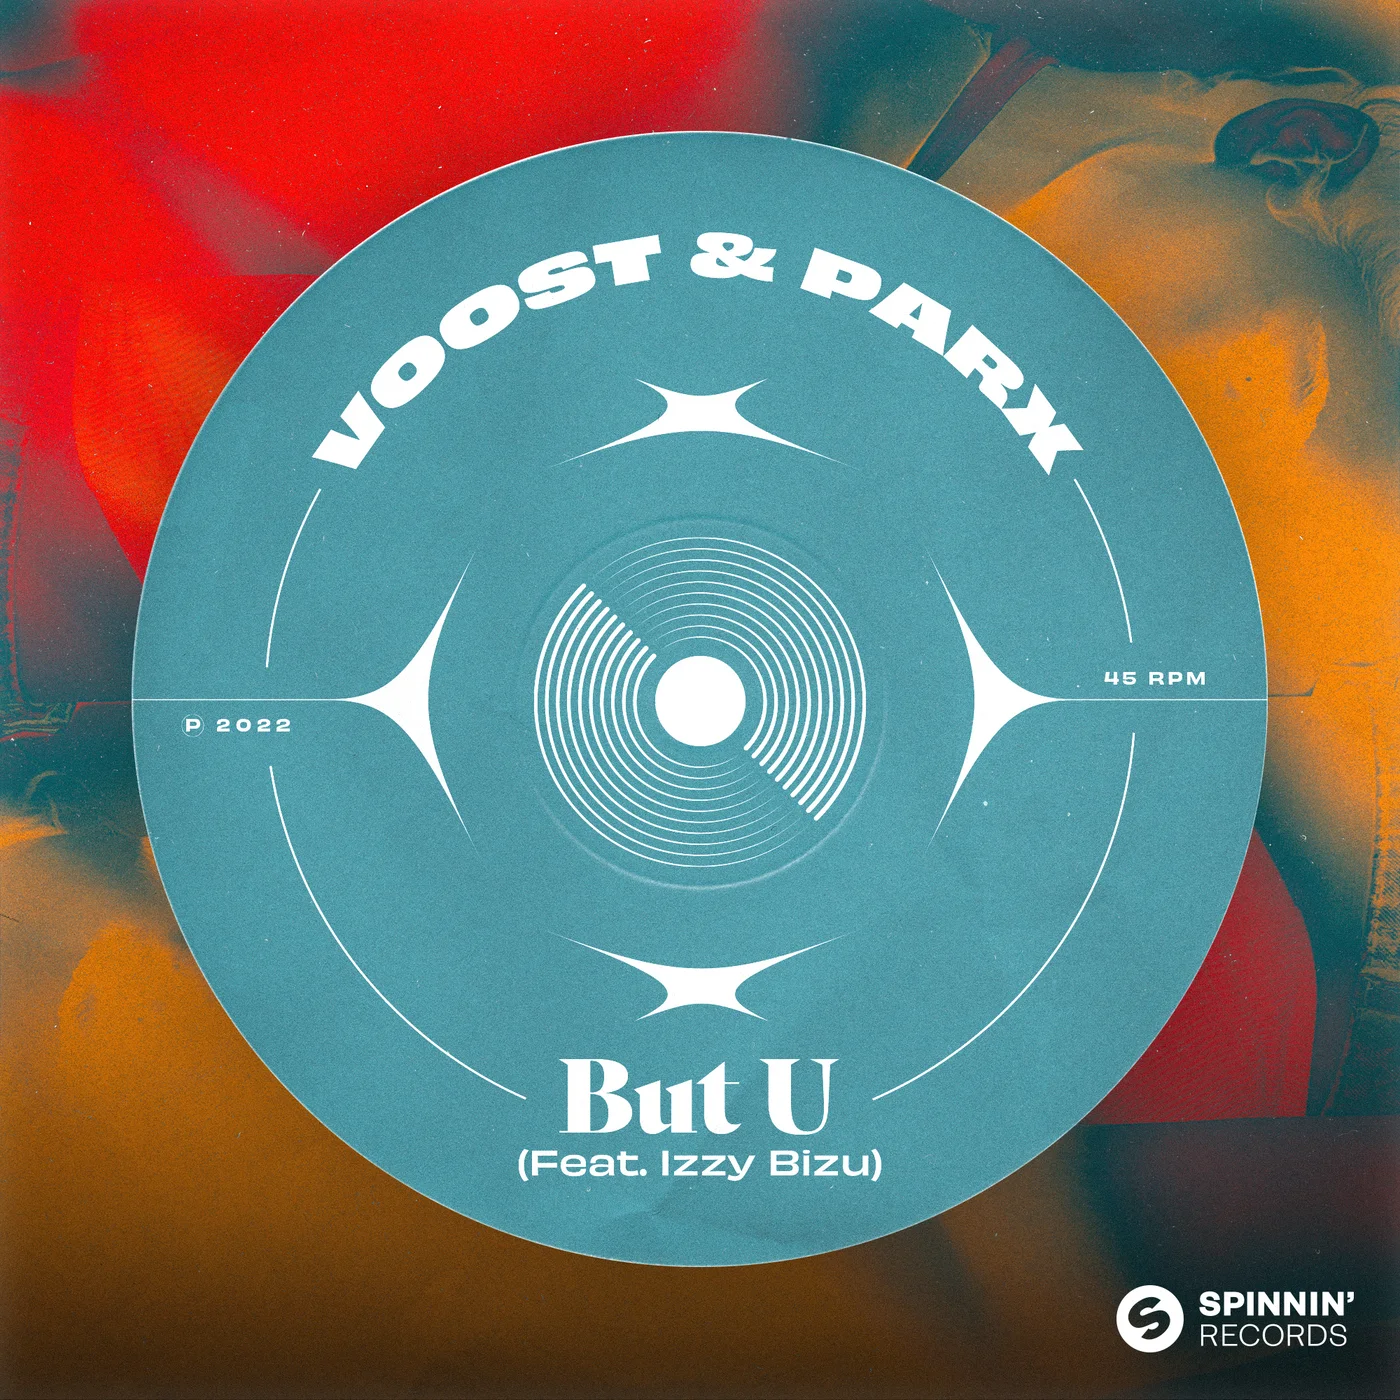 Voost & Parx featuring Izzy Bizu — But U cover artwork